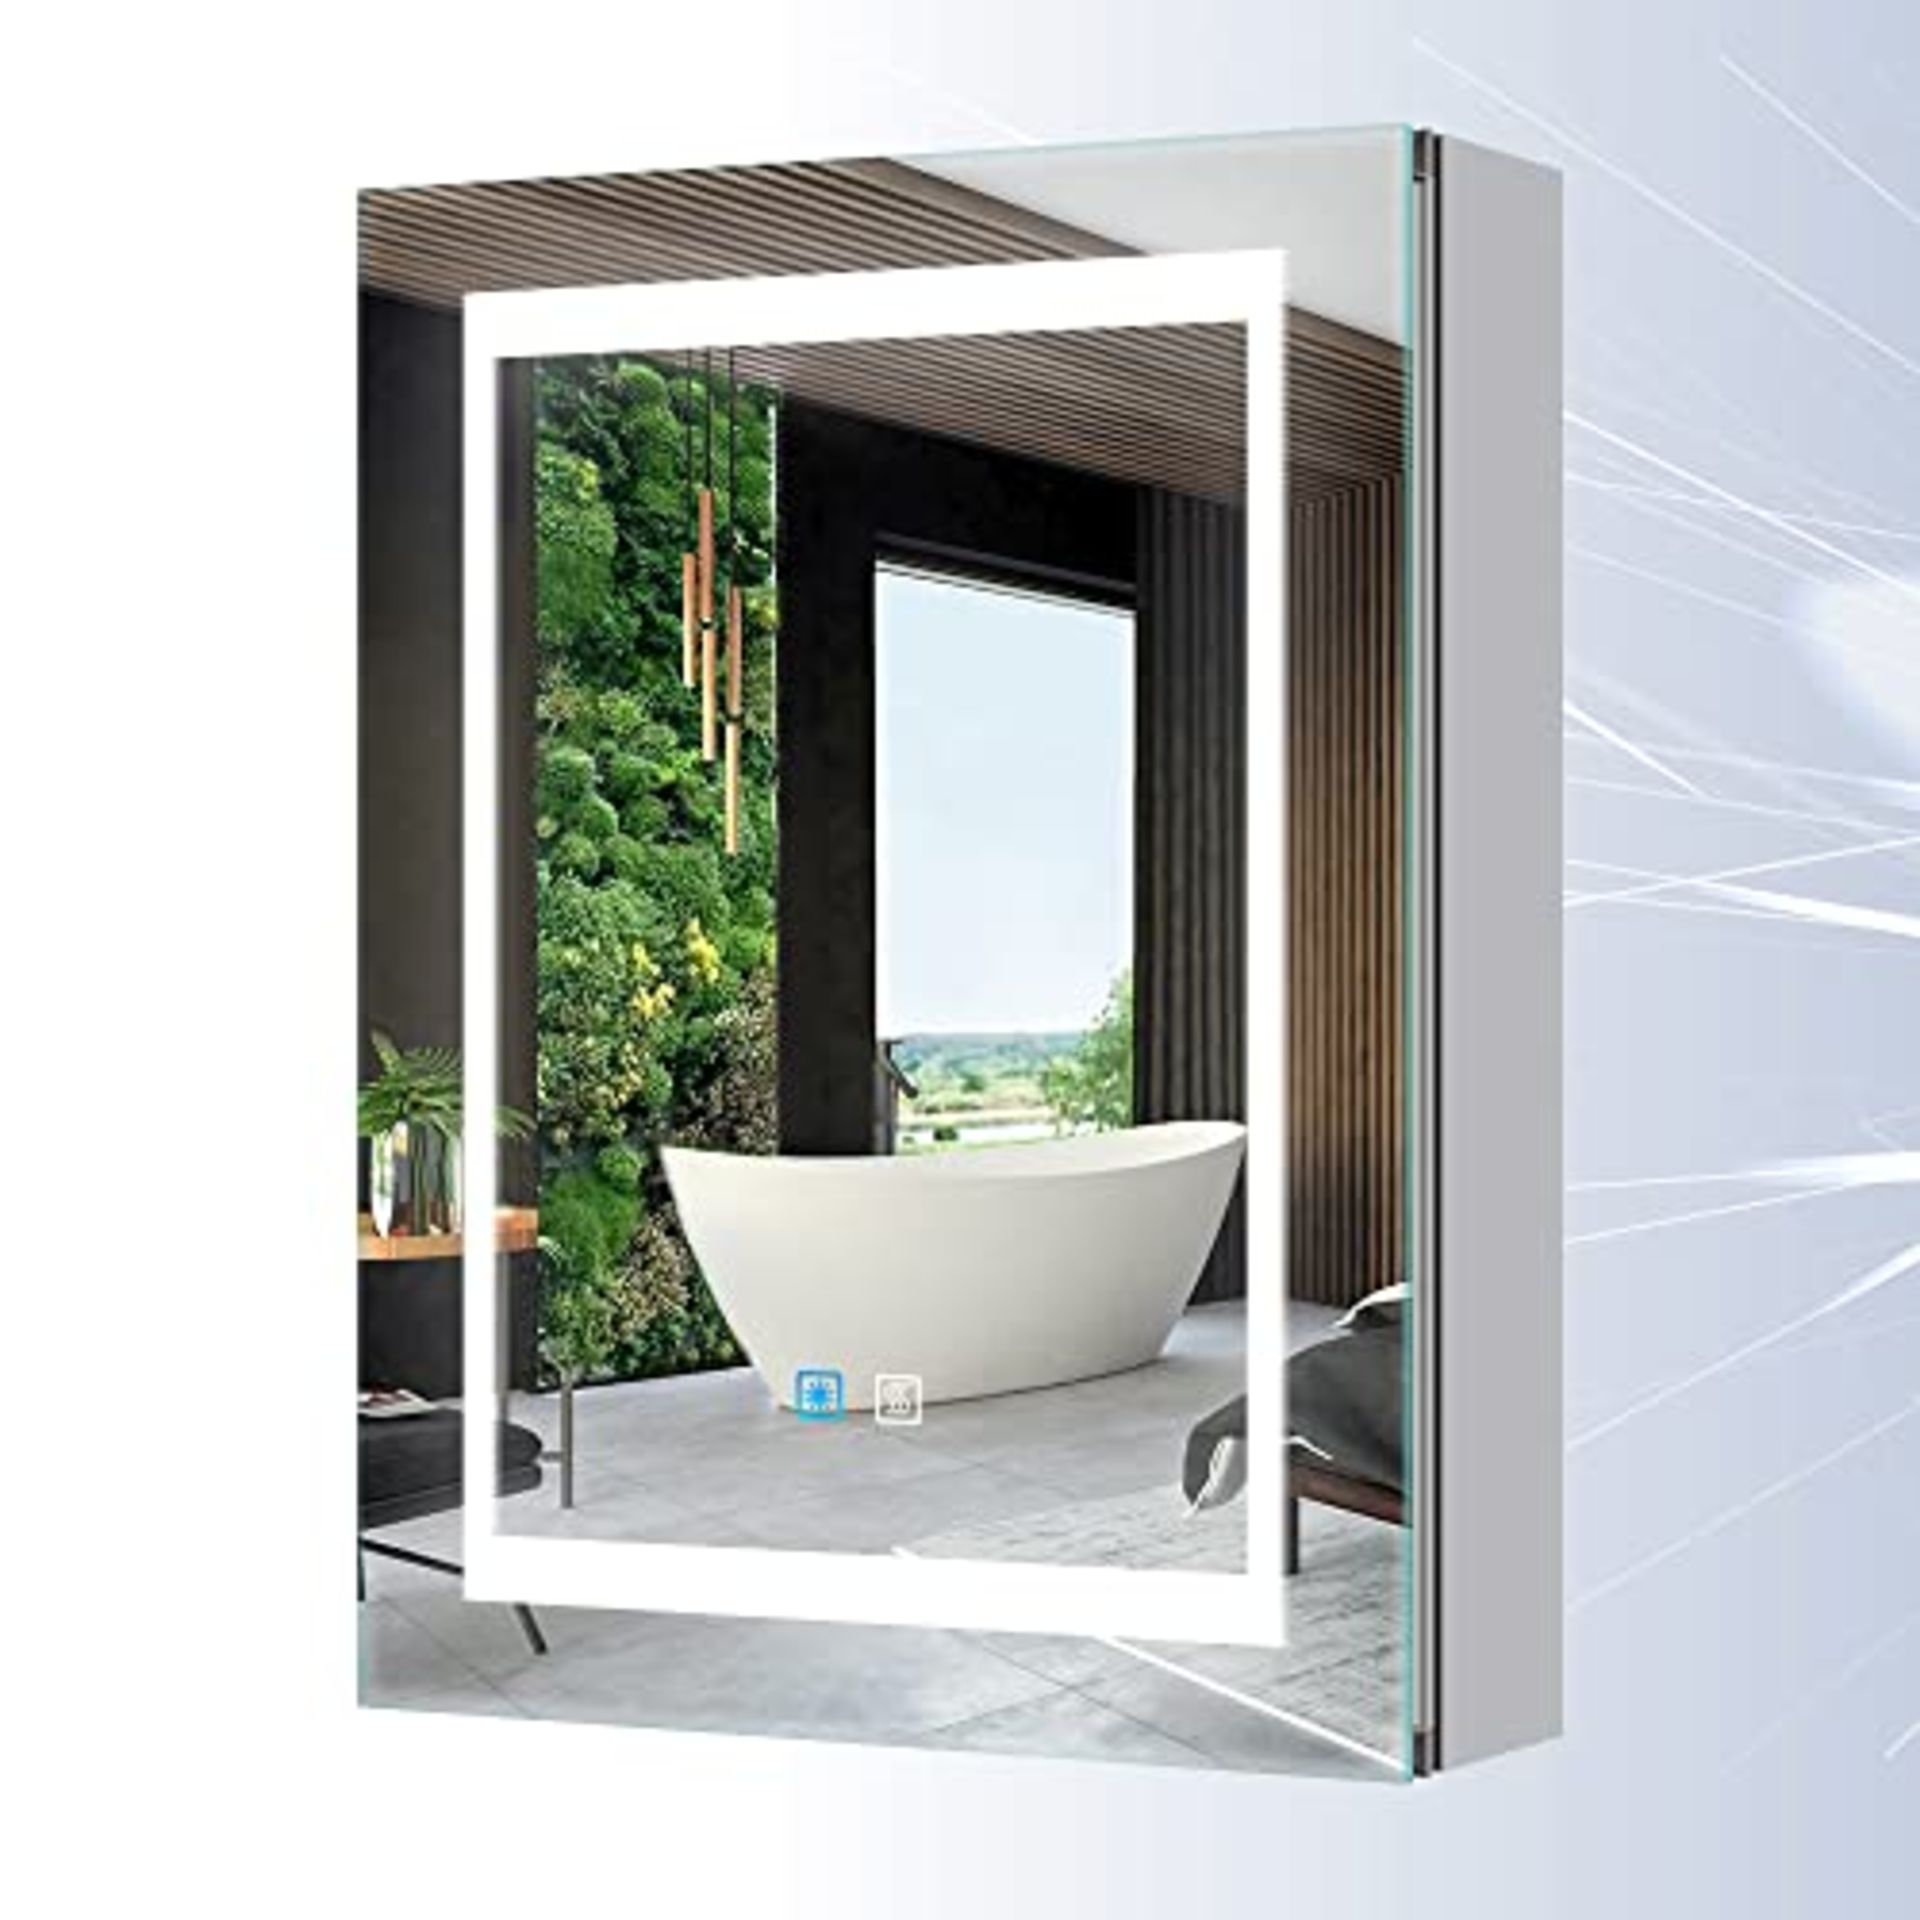 RRP £242.00 Tokvon Viewfinder Bathroom Mirror Cabinet with Backlit